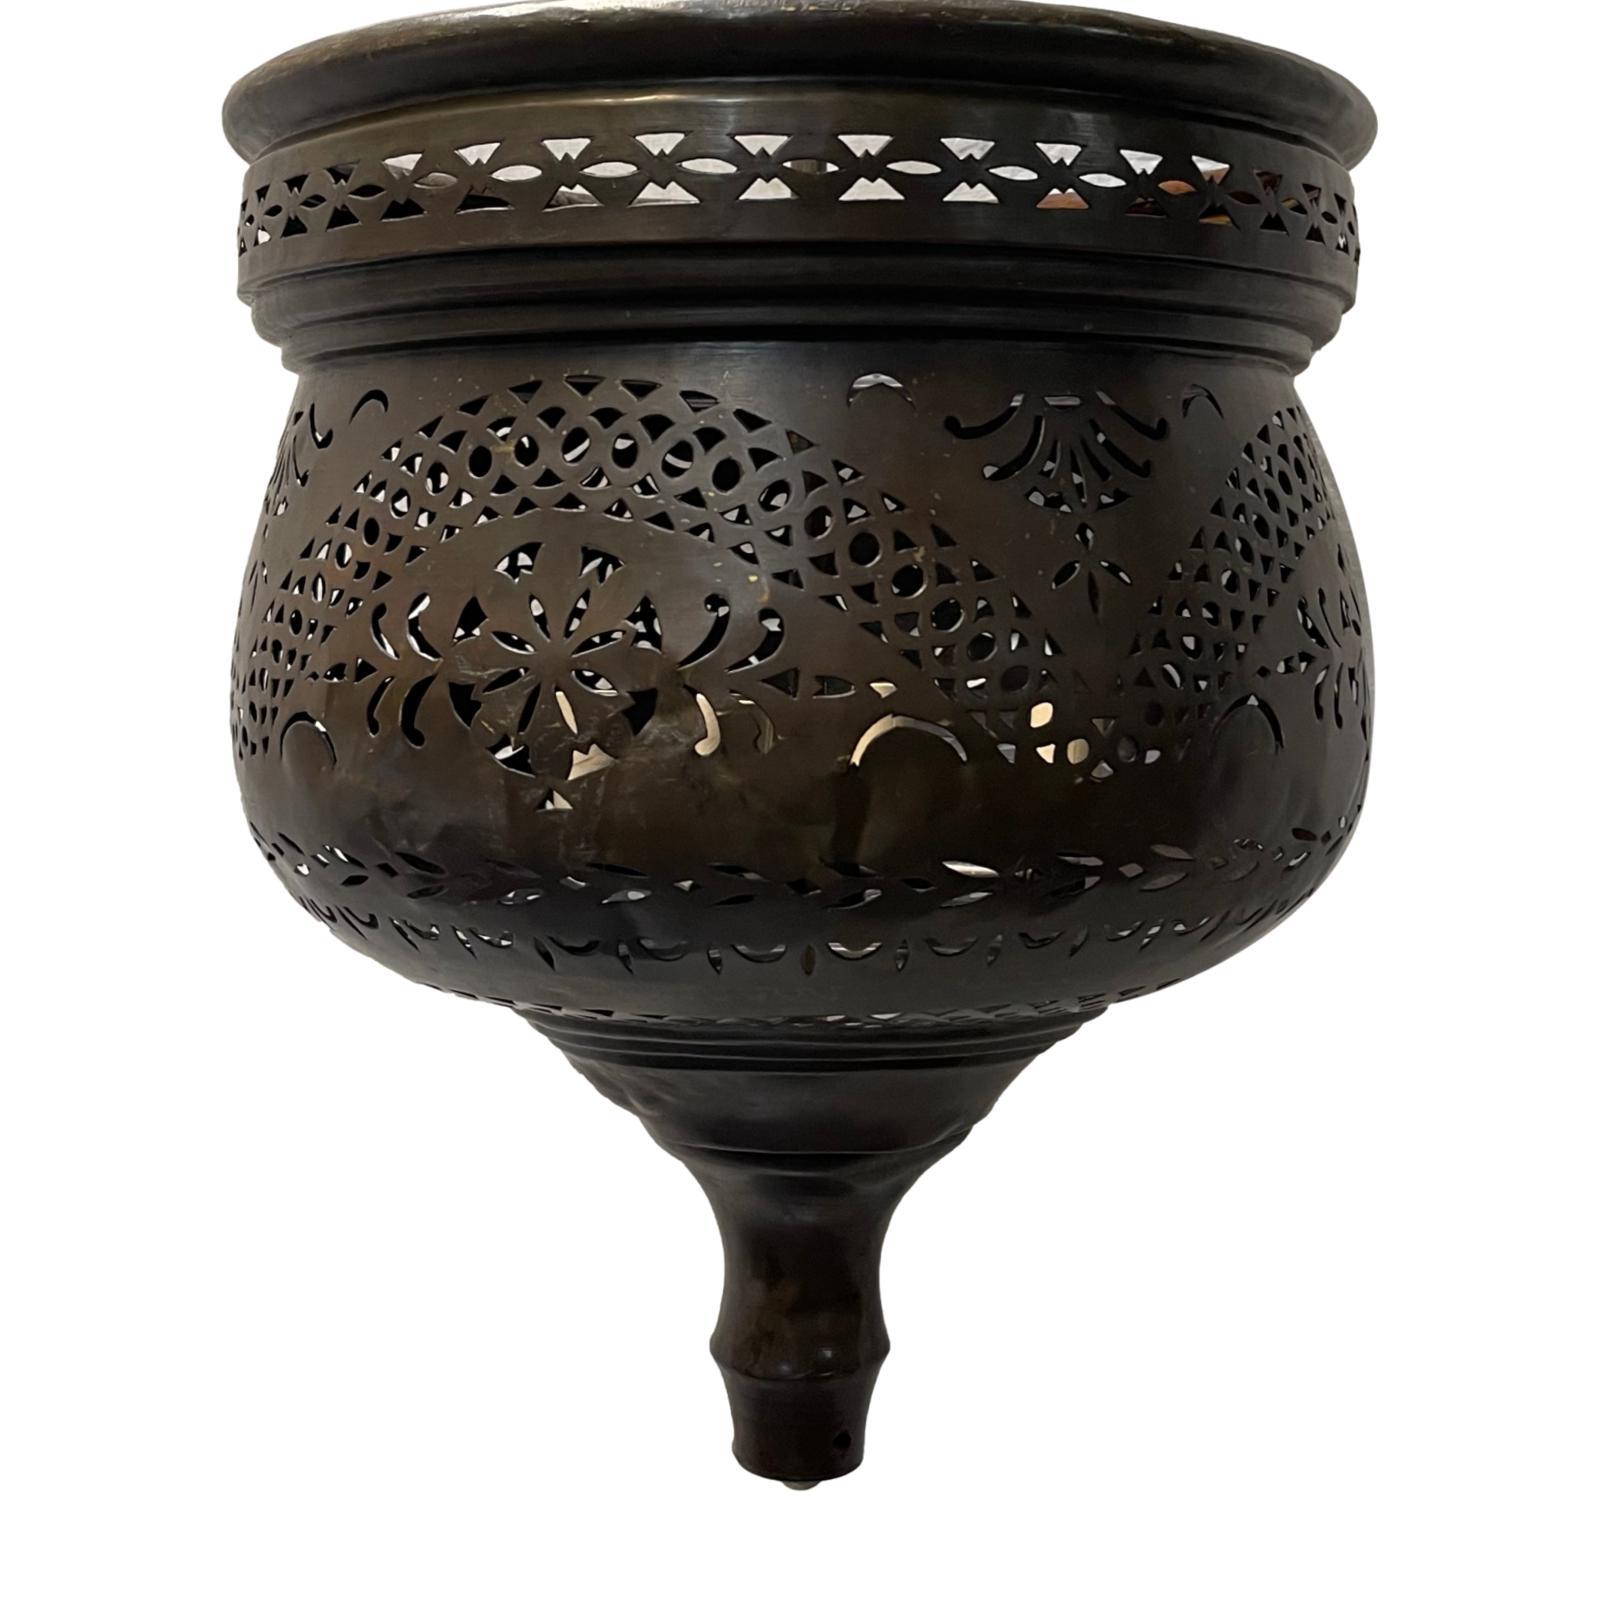 A circa 1900 antique Persian light fixture with four interior candelabra lights.

Measurements:
Drop: 26”
Diameter: 14”.